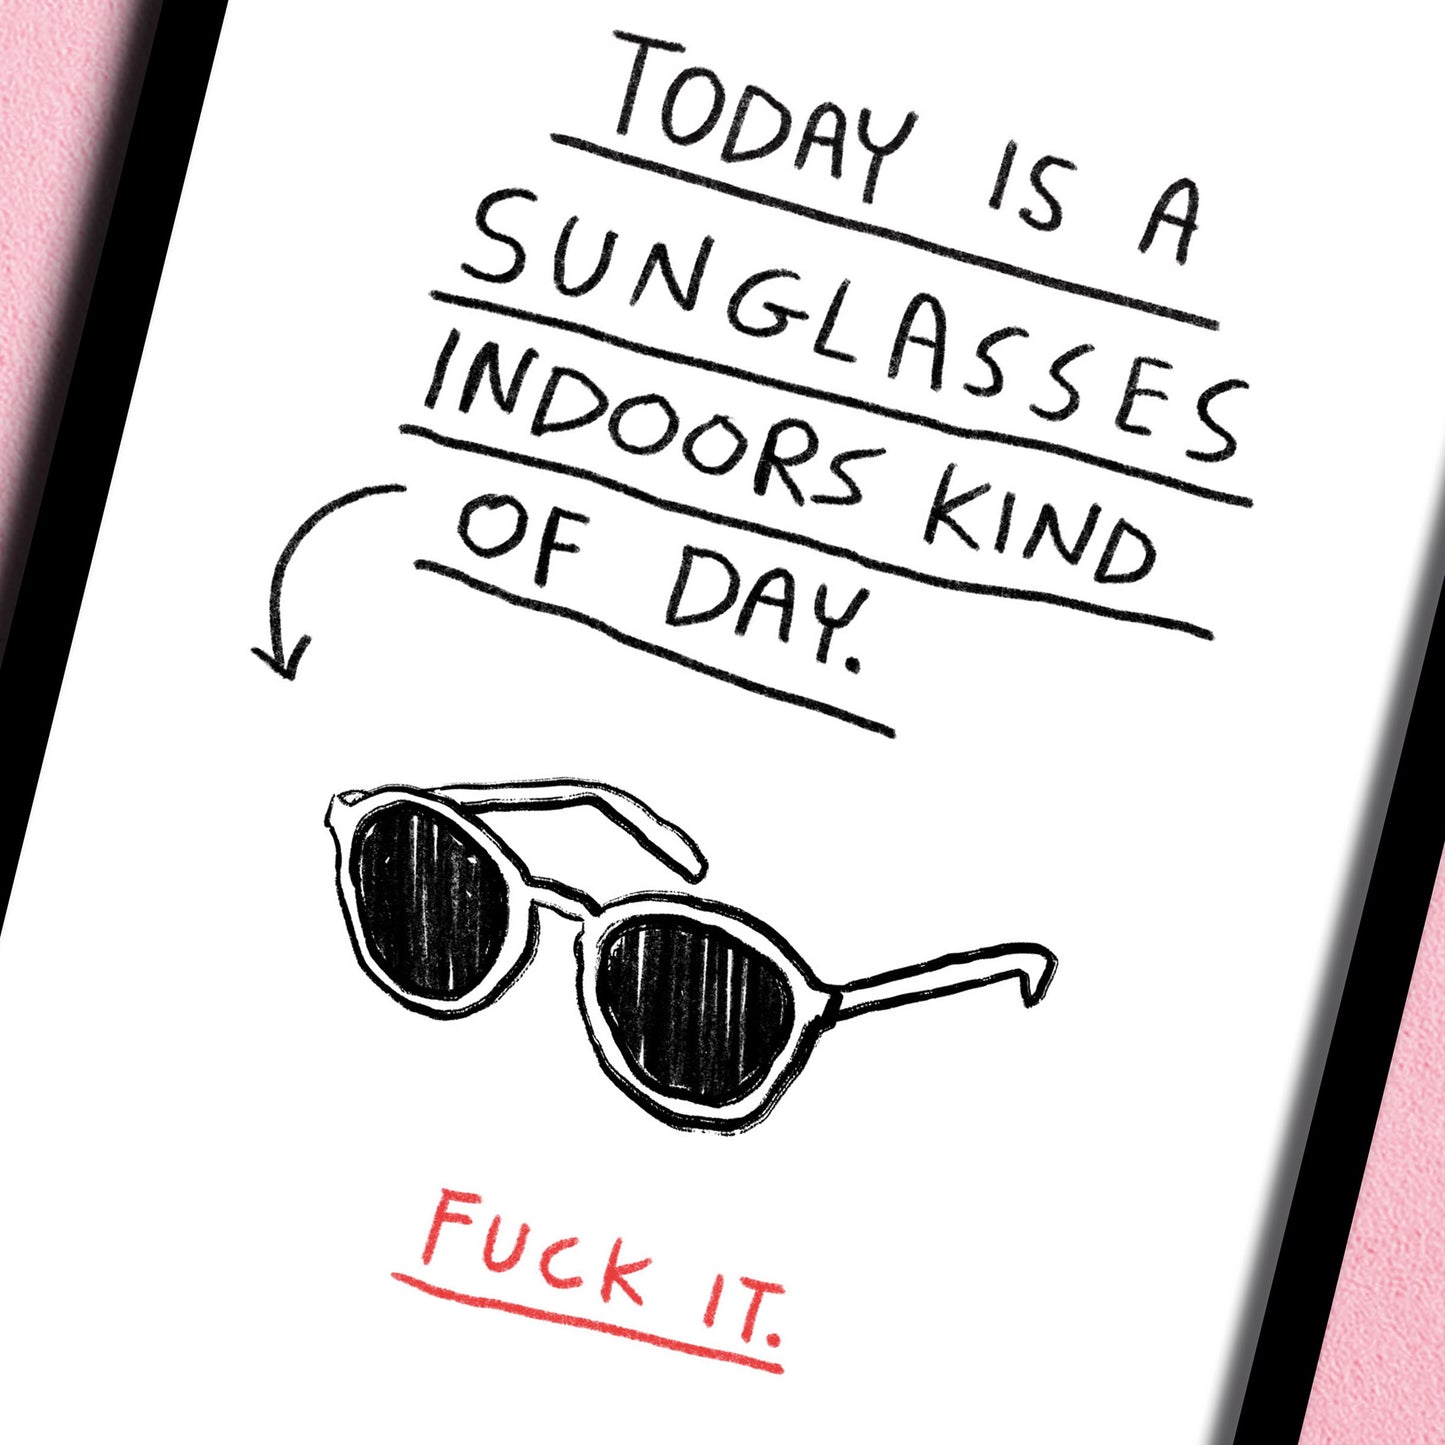 Sunglasses Indoors print